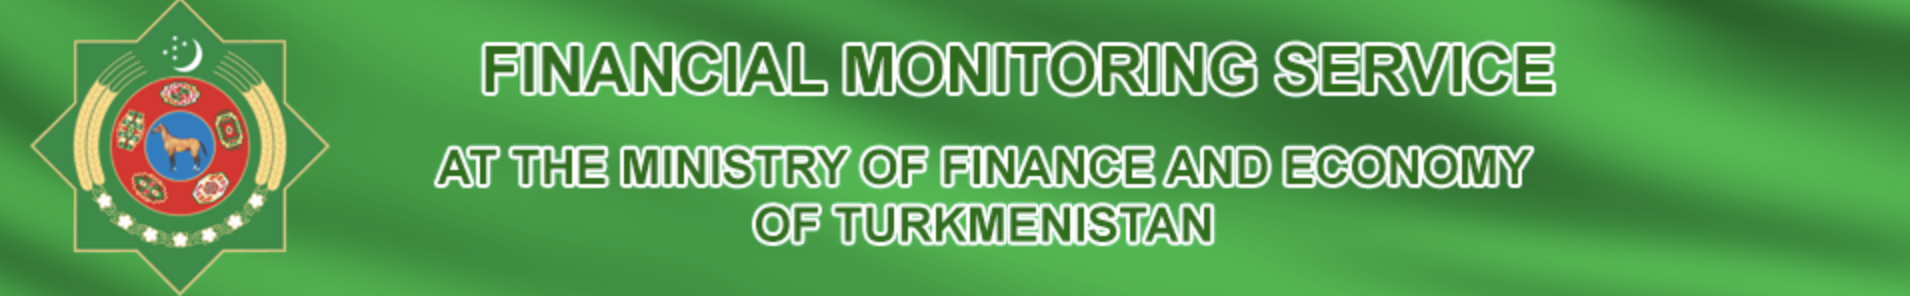 Finansdepartementet turkmenistan logo